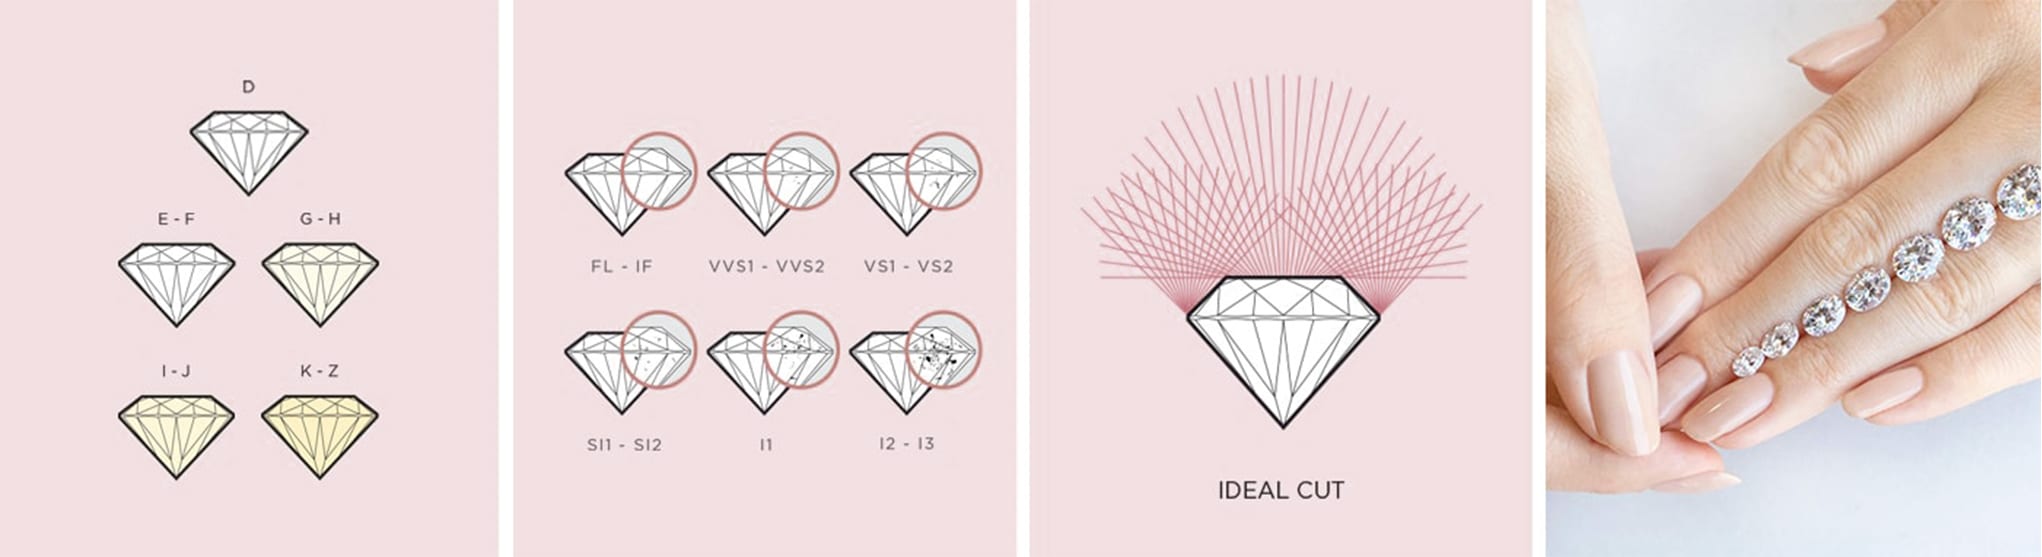 The 4Cs of diamond quality chart.